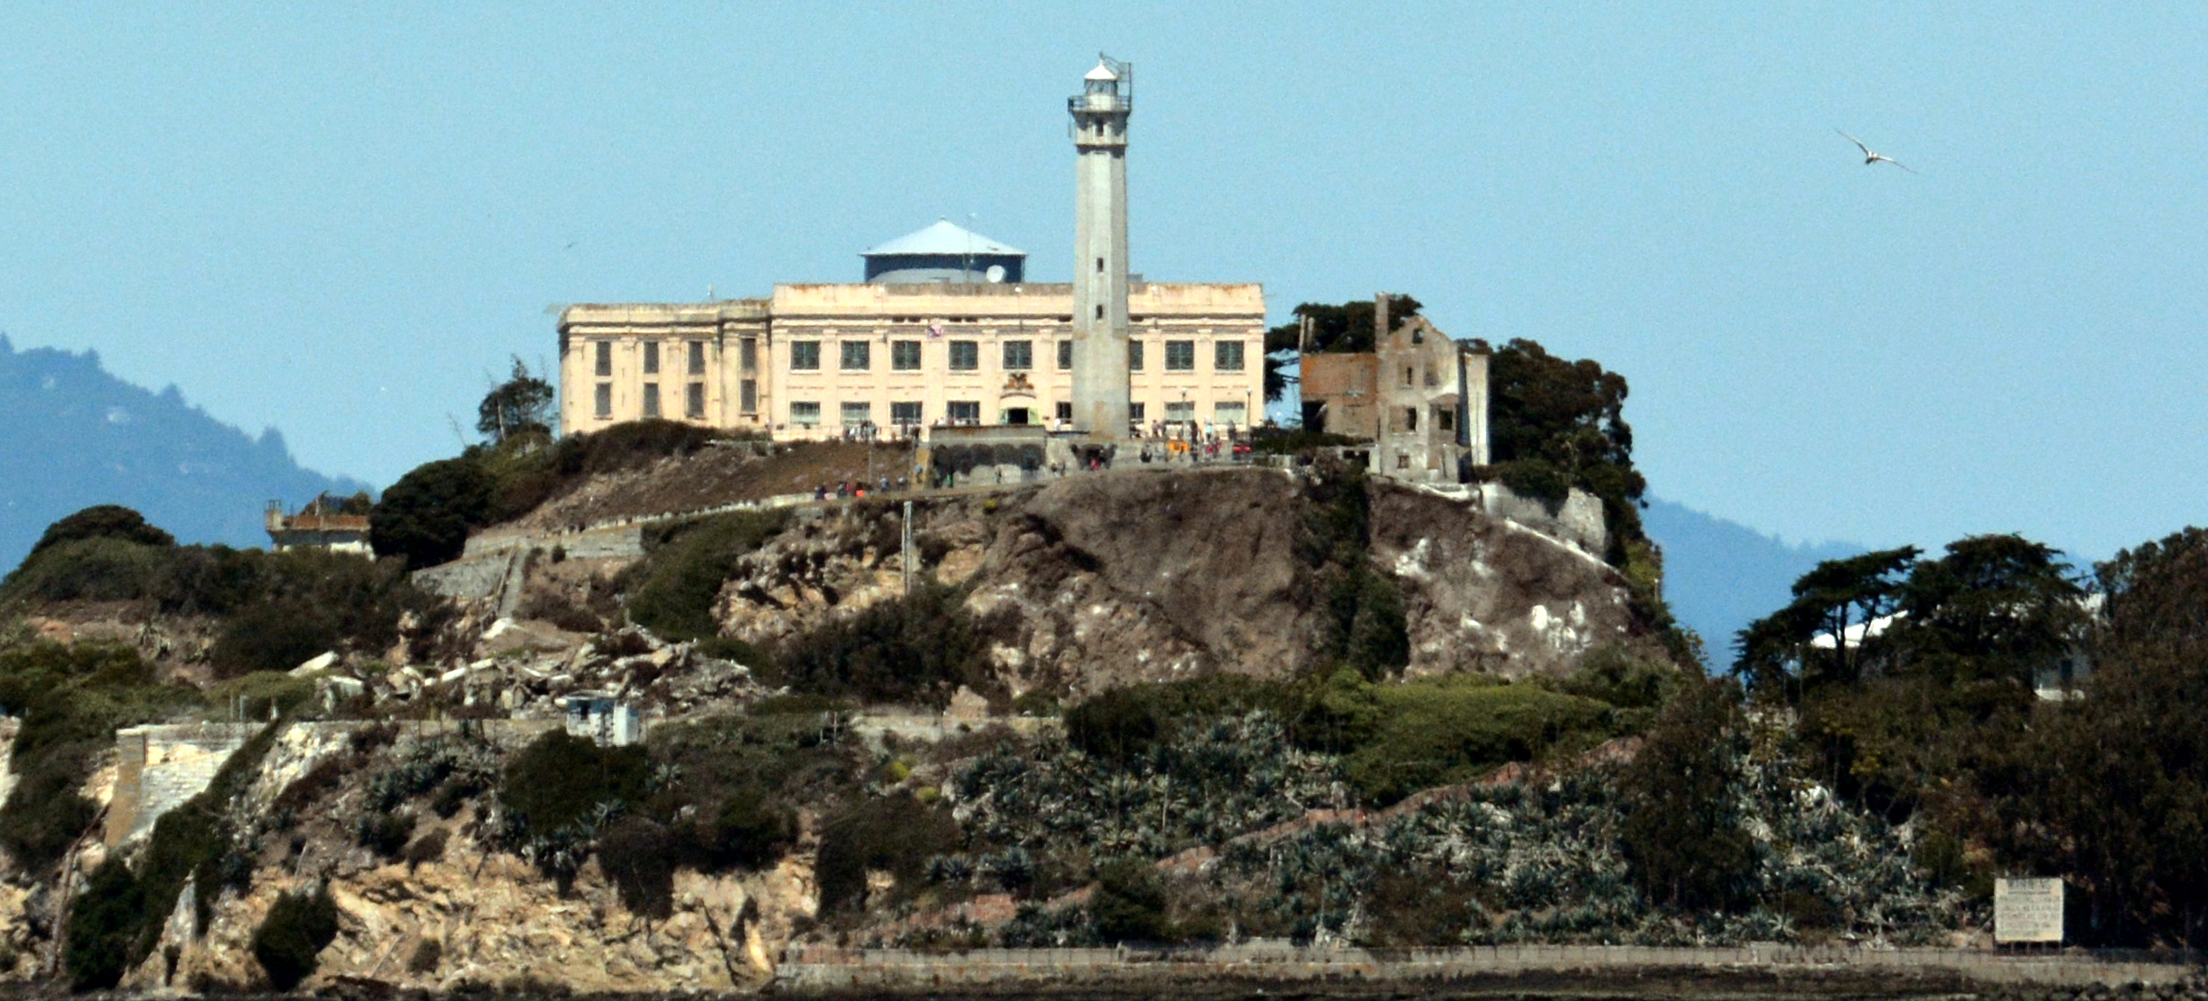 Alcatraz San Island Francisco, California, United States - Located In Water (1)